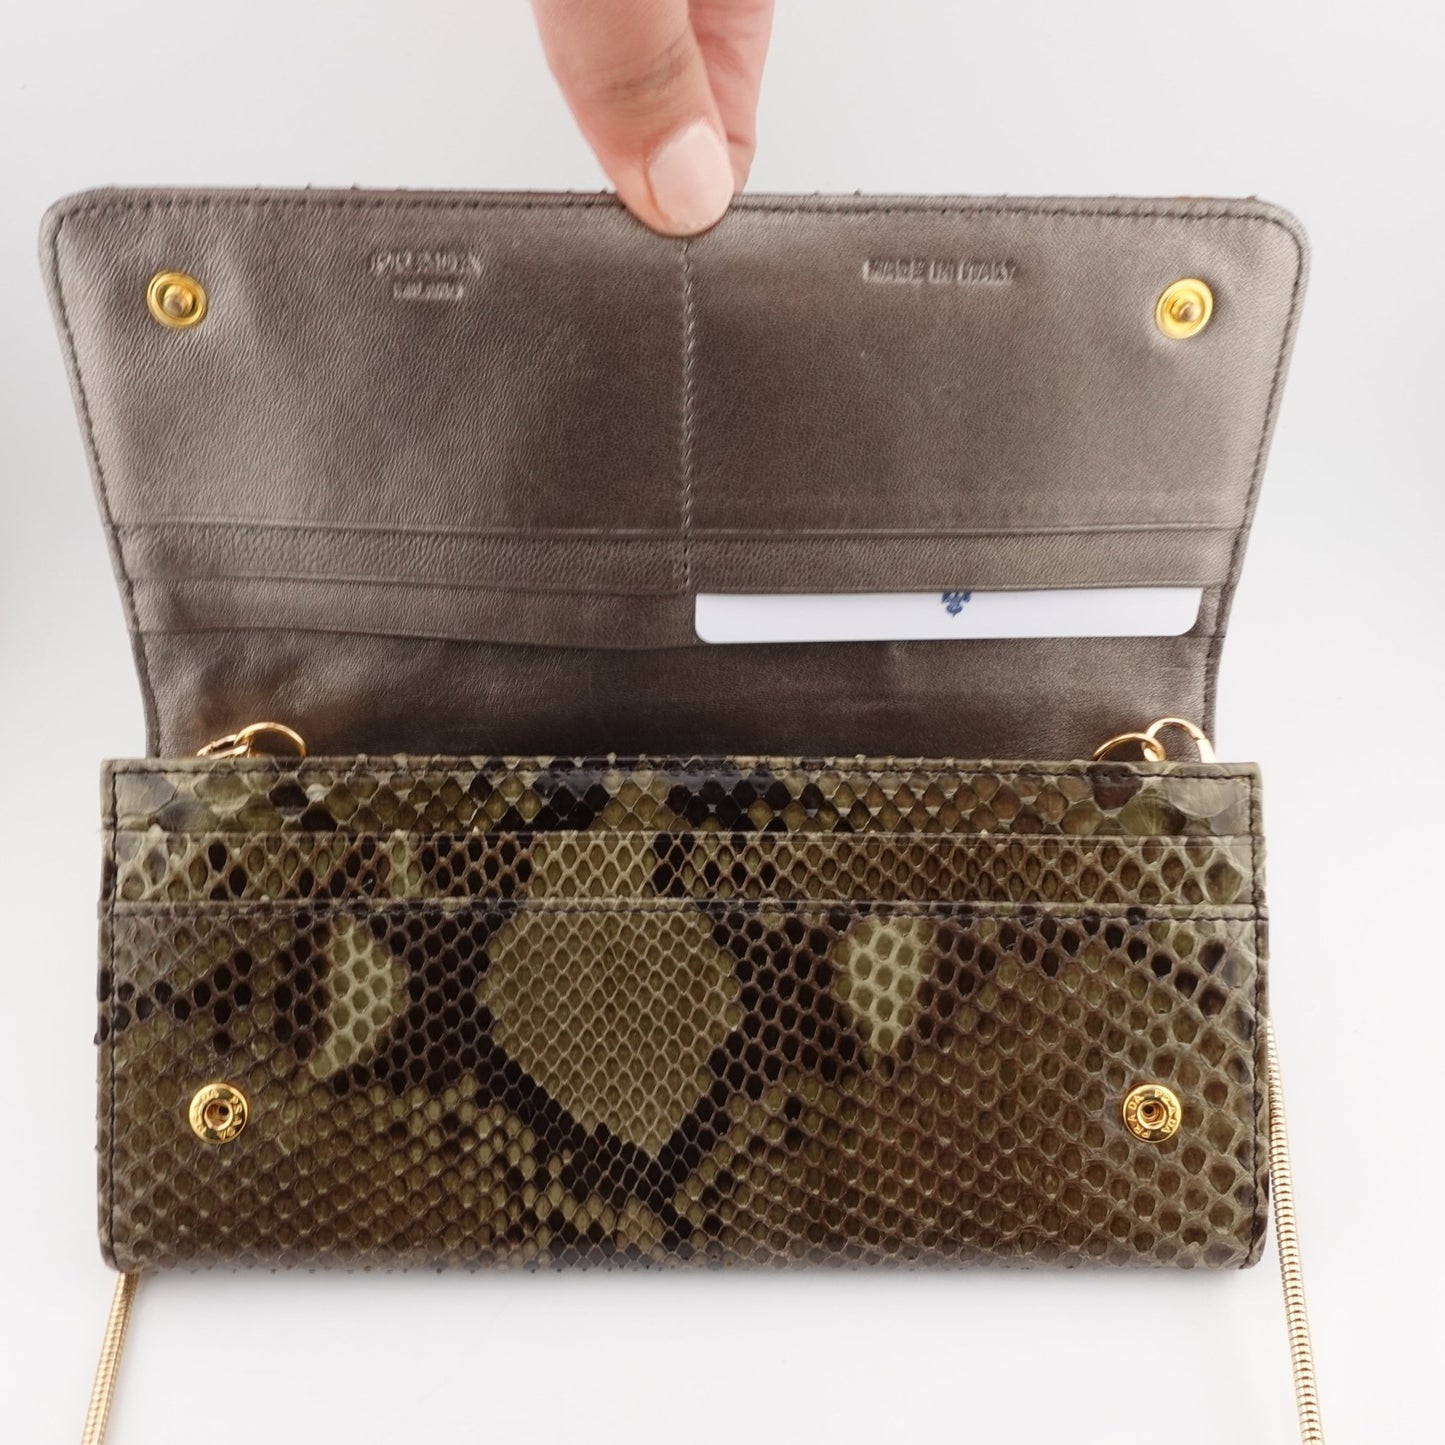 PRADA Python Wallet on Chain - Bag Envy